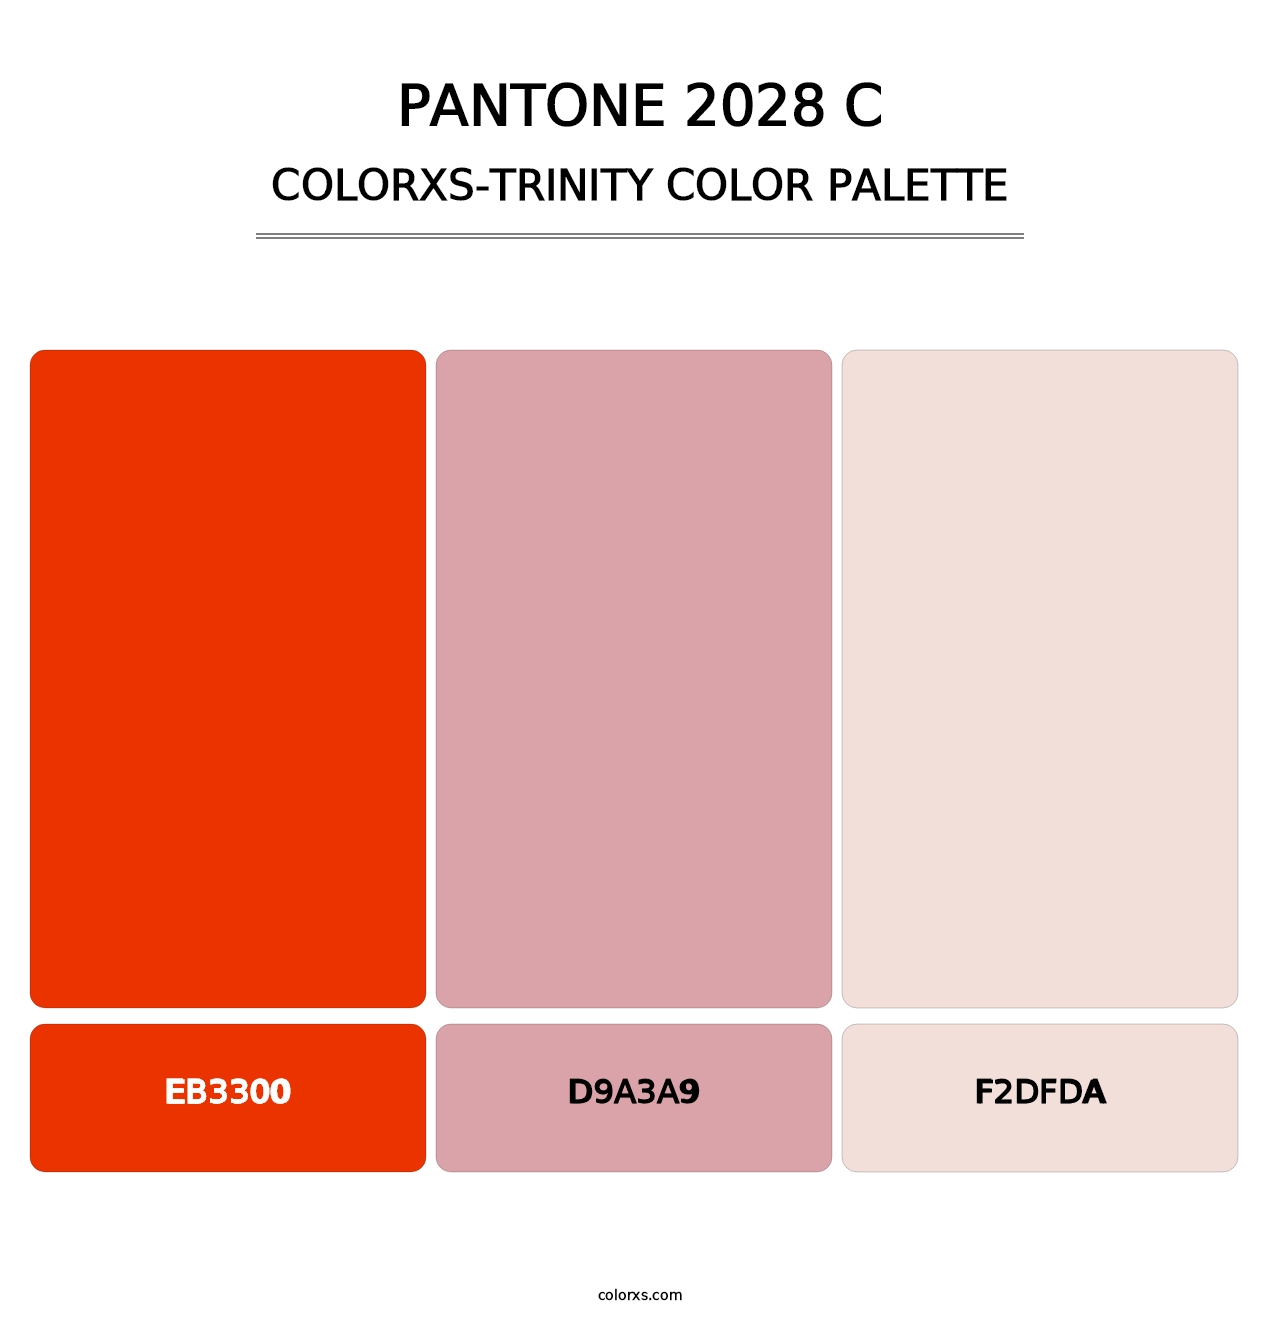 PANTONE 2028 C - Colorxs Trinity Palette